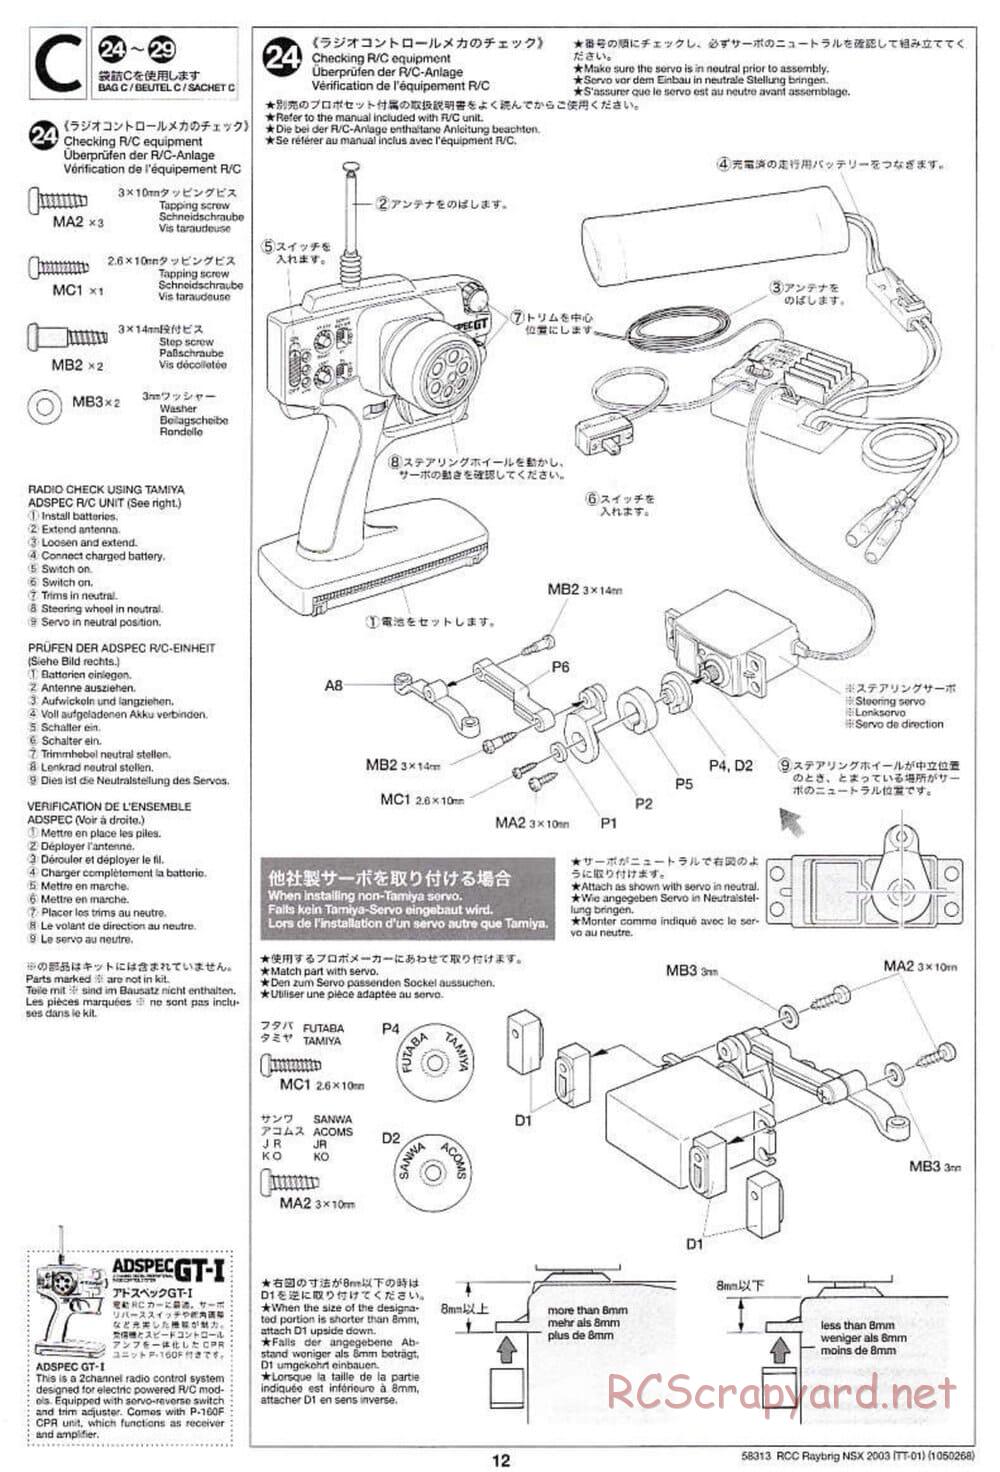 Tamiya - Raybrig NSX 2003 - TT-01 Chassis - Manual - Page 12